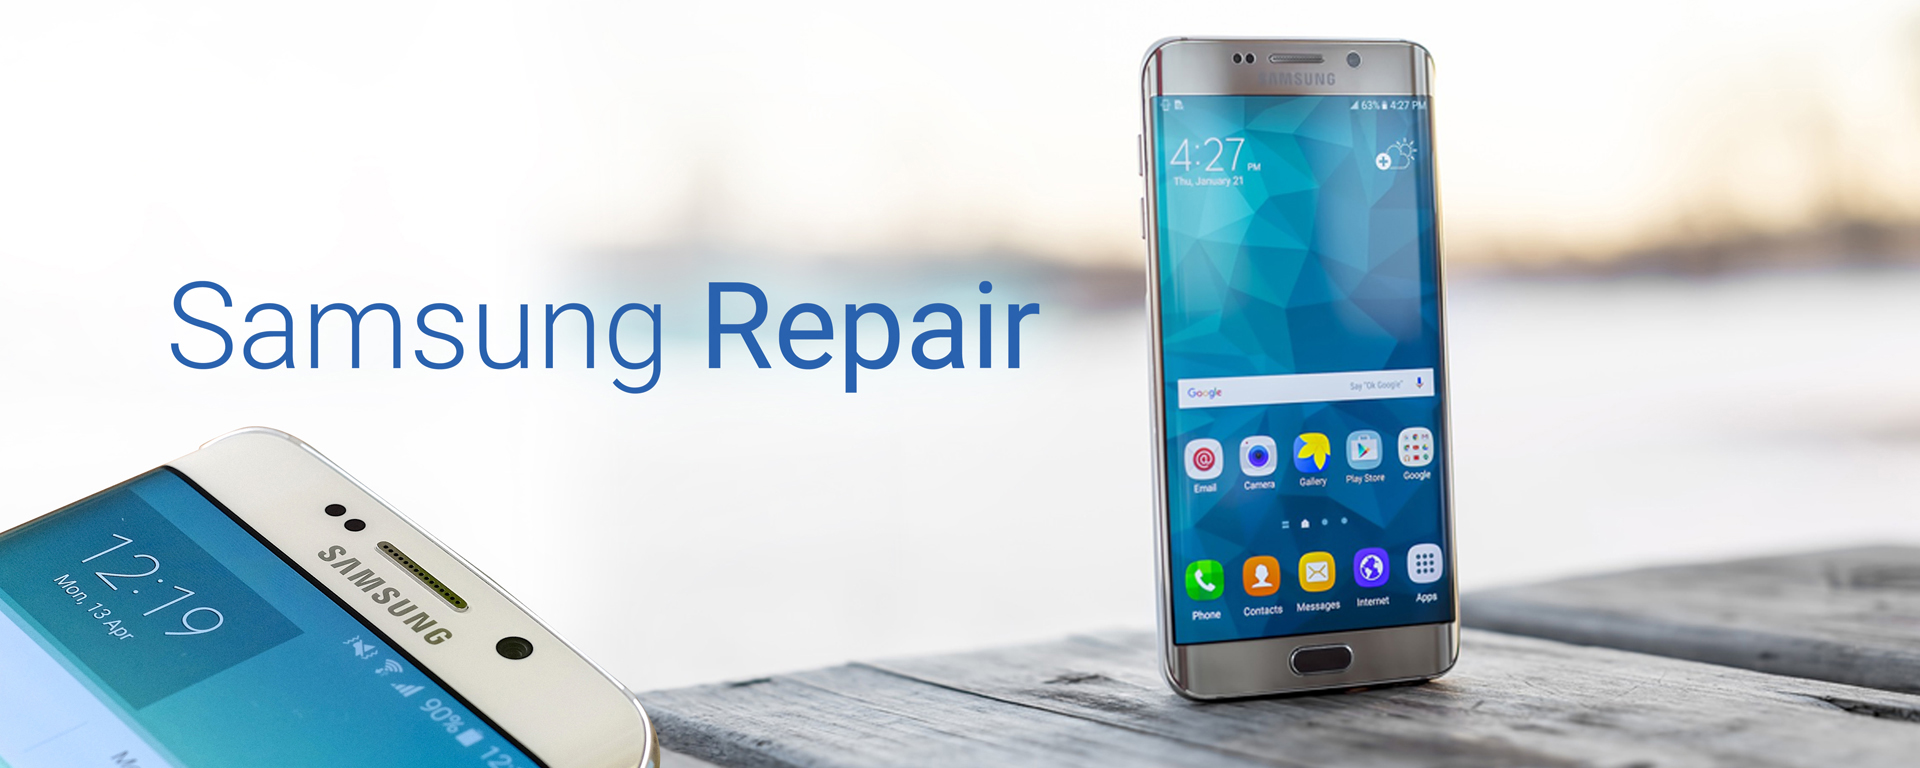 low price mobile phone repairing solution in india